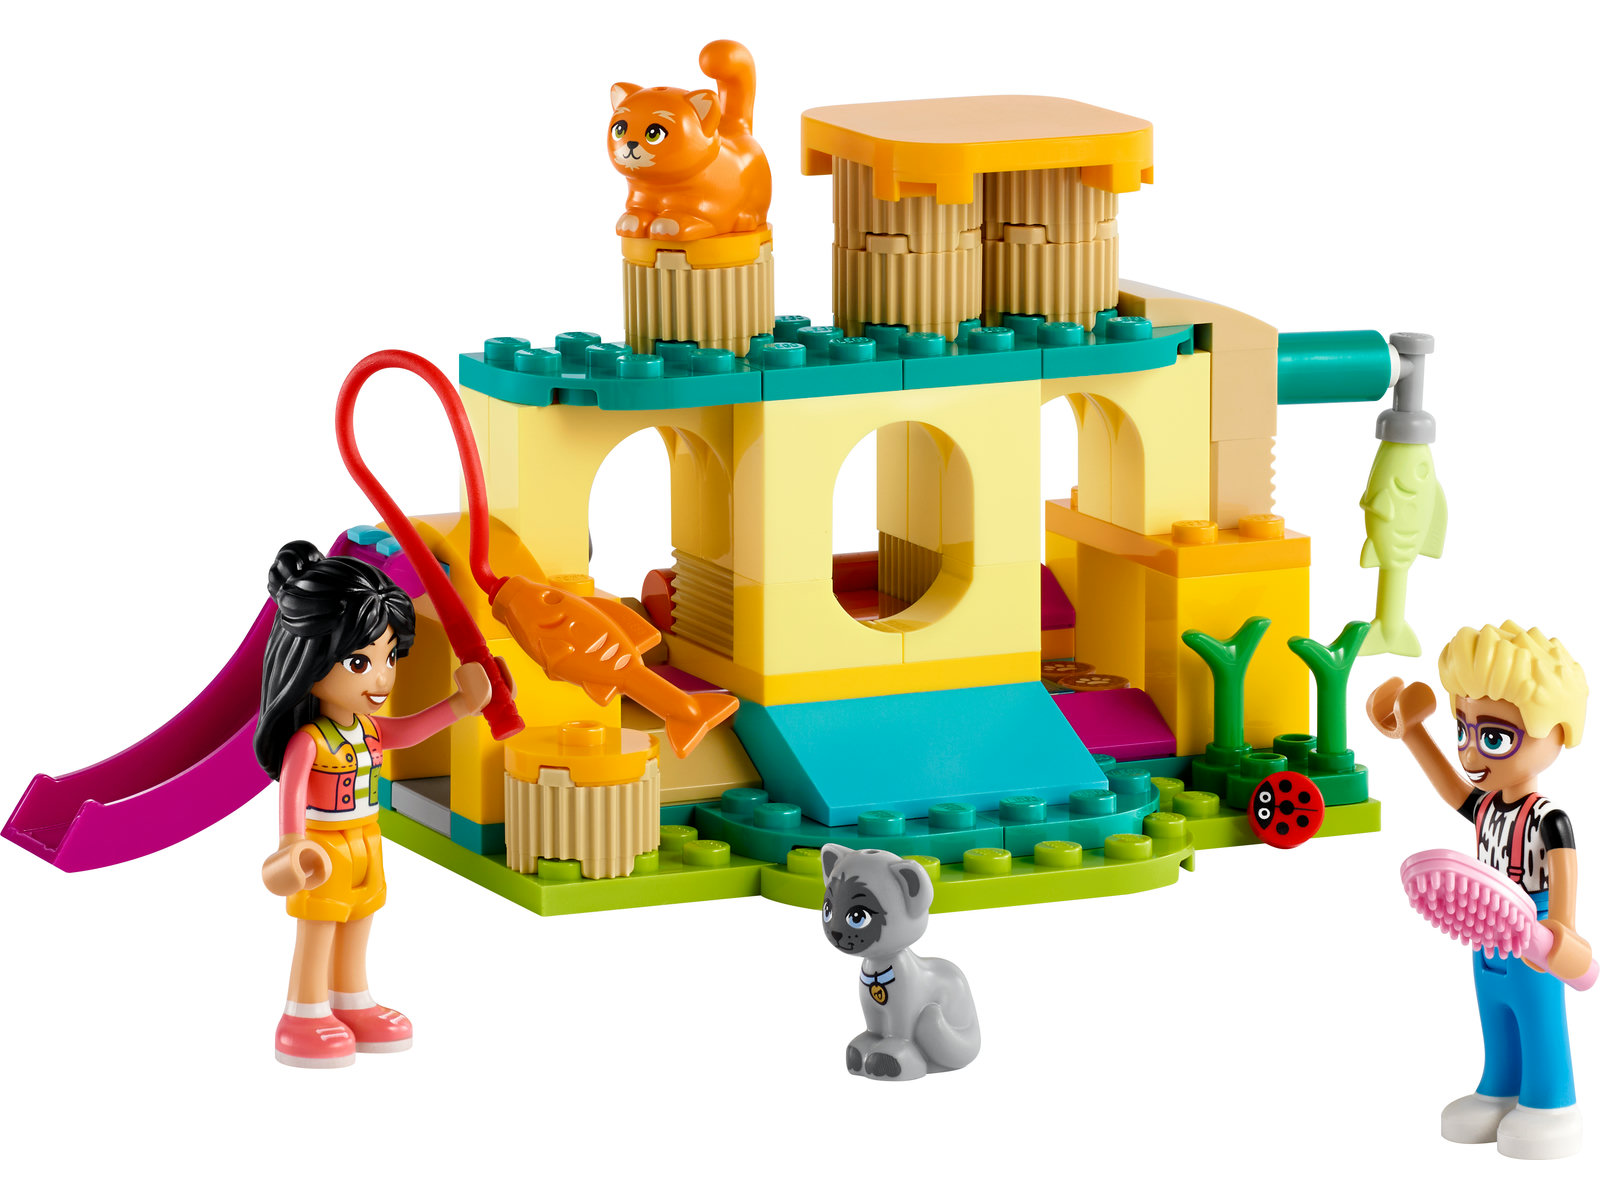 LEGO® Friends 42612 - Abenteuer auf dem Katzenspielplatz